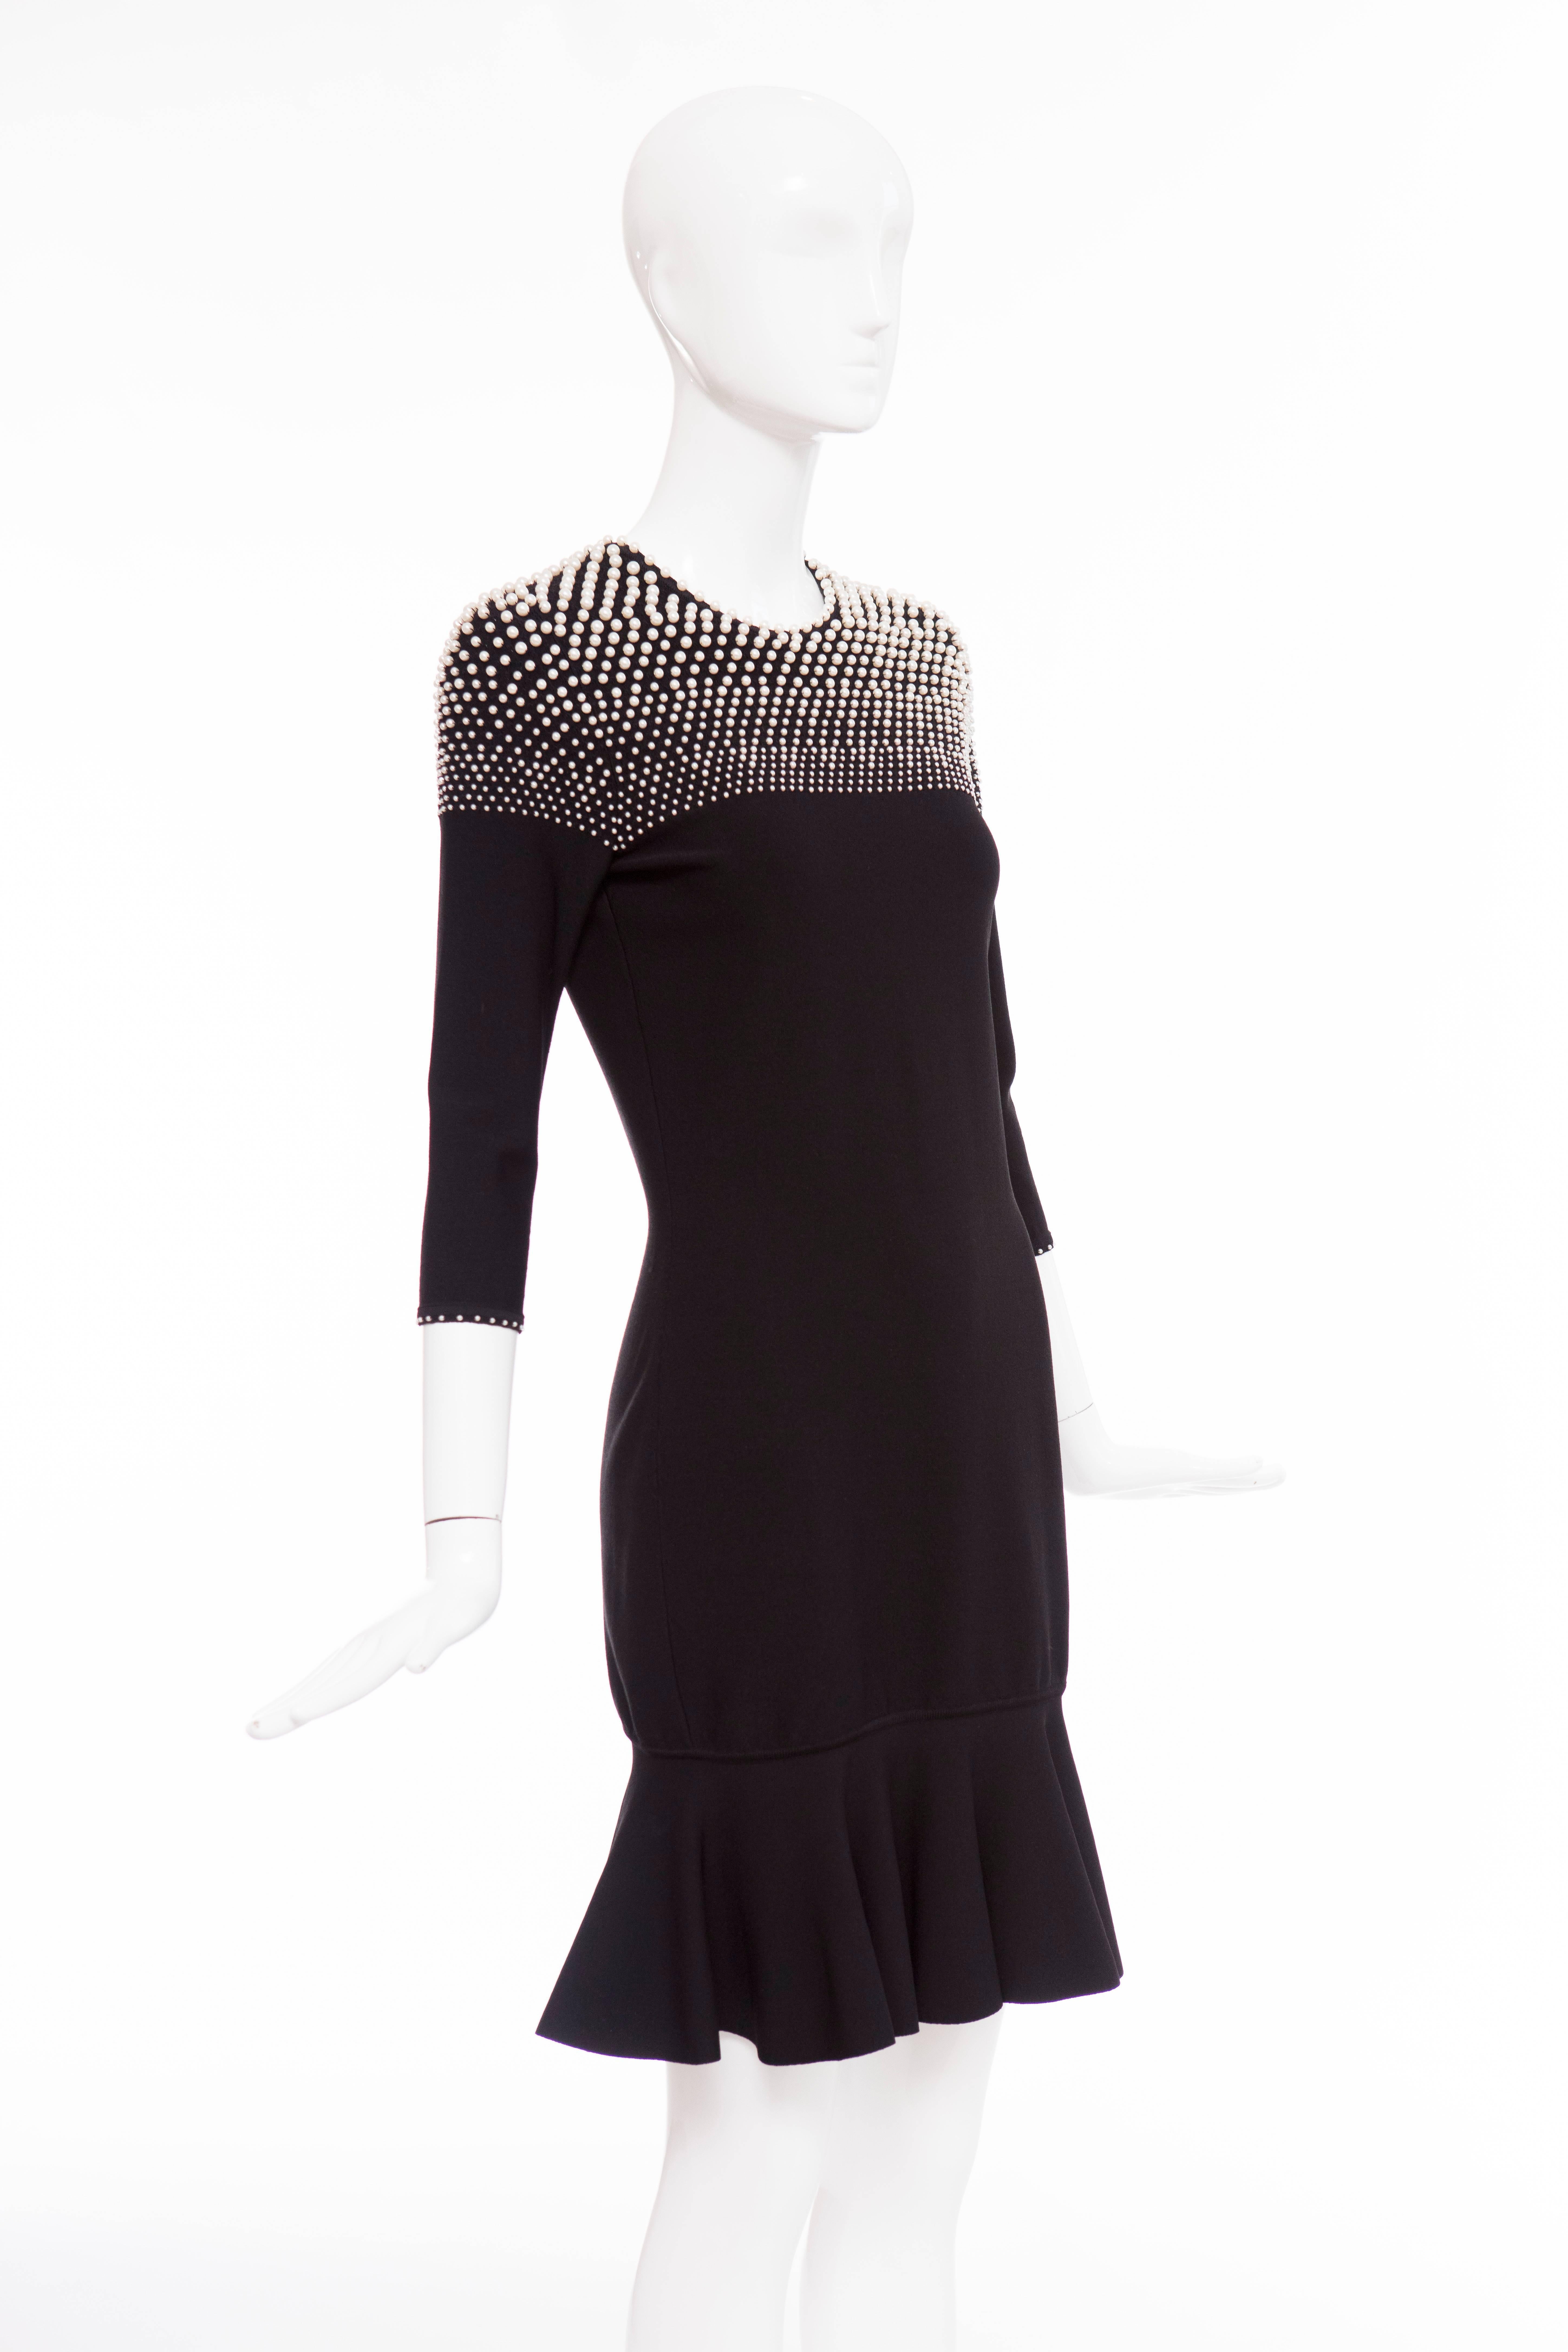 Alexander McQueen Black Knit Dress With Pearl Neckline, Autumn - Winter 2013 In Excellent Condition For Sale In Cincinnati, OH